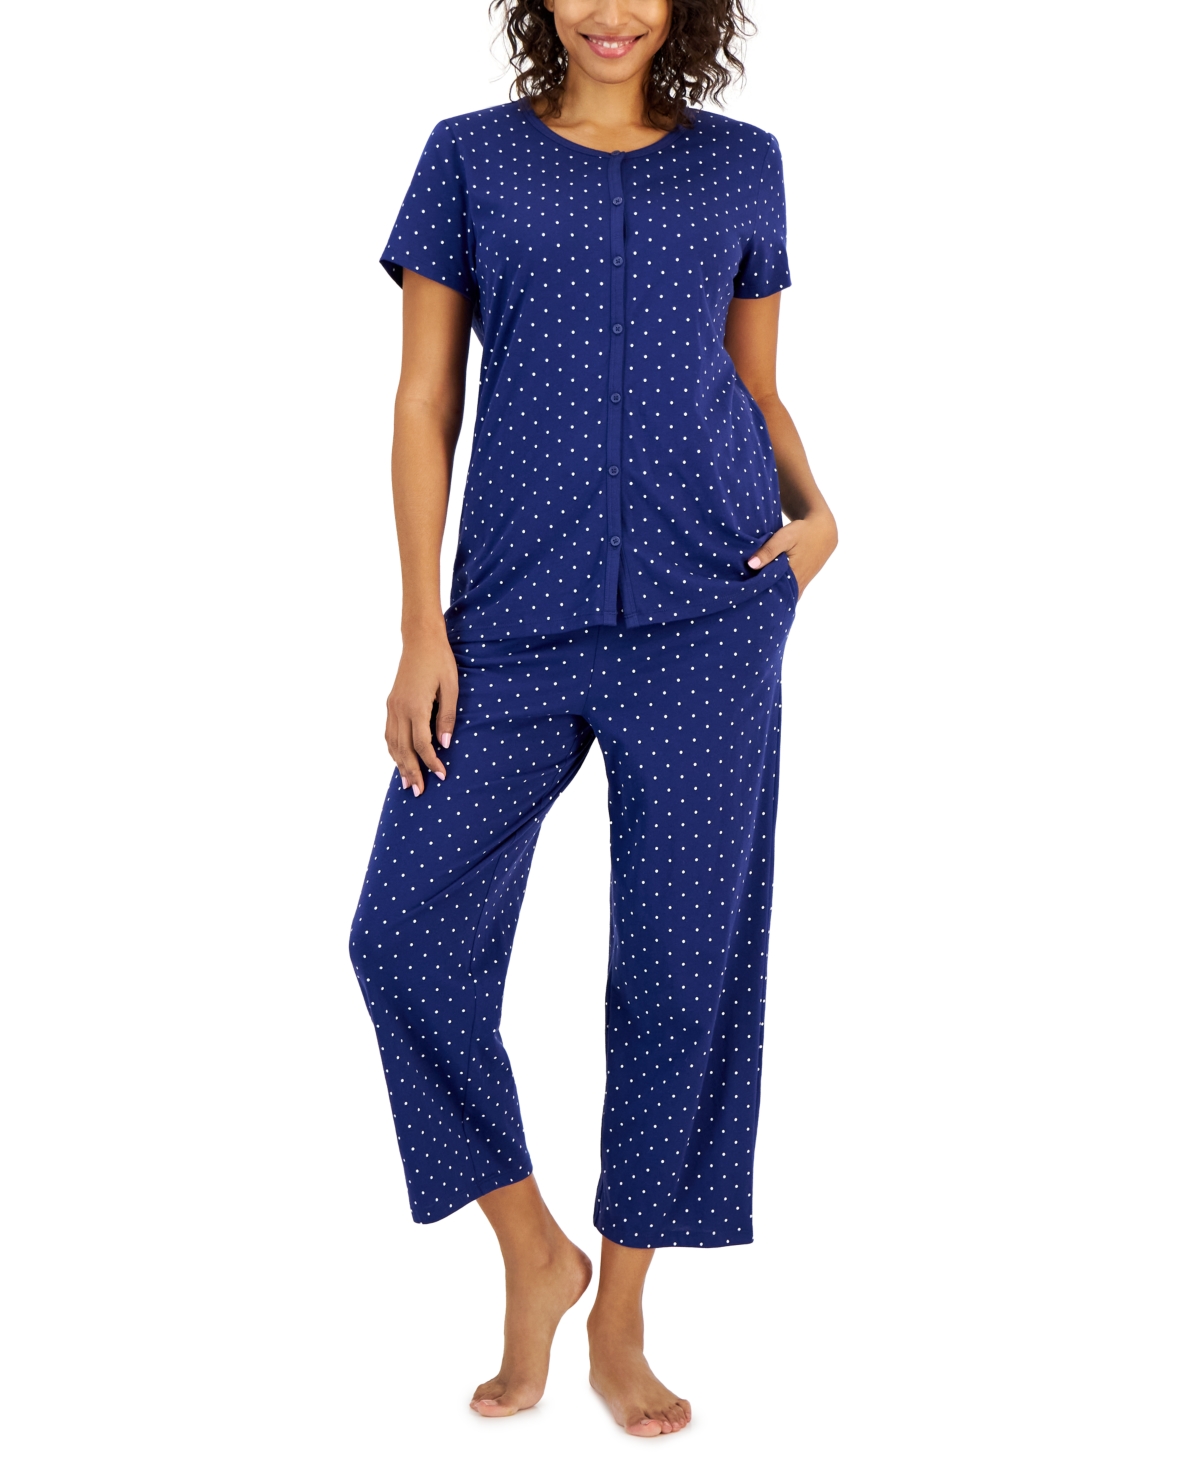 Sleepwear for Women at Macy's - Womens Pajamas & Sleepwear - Macy's Large